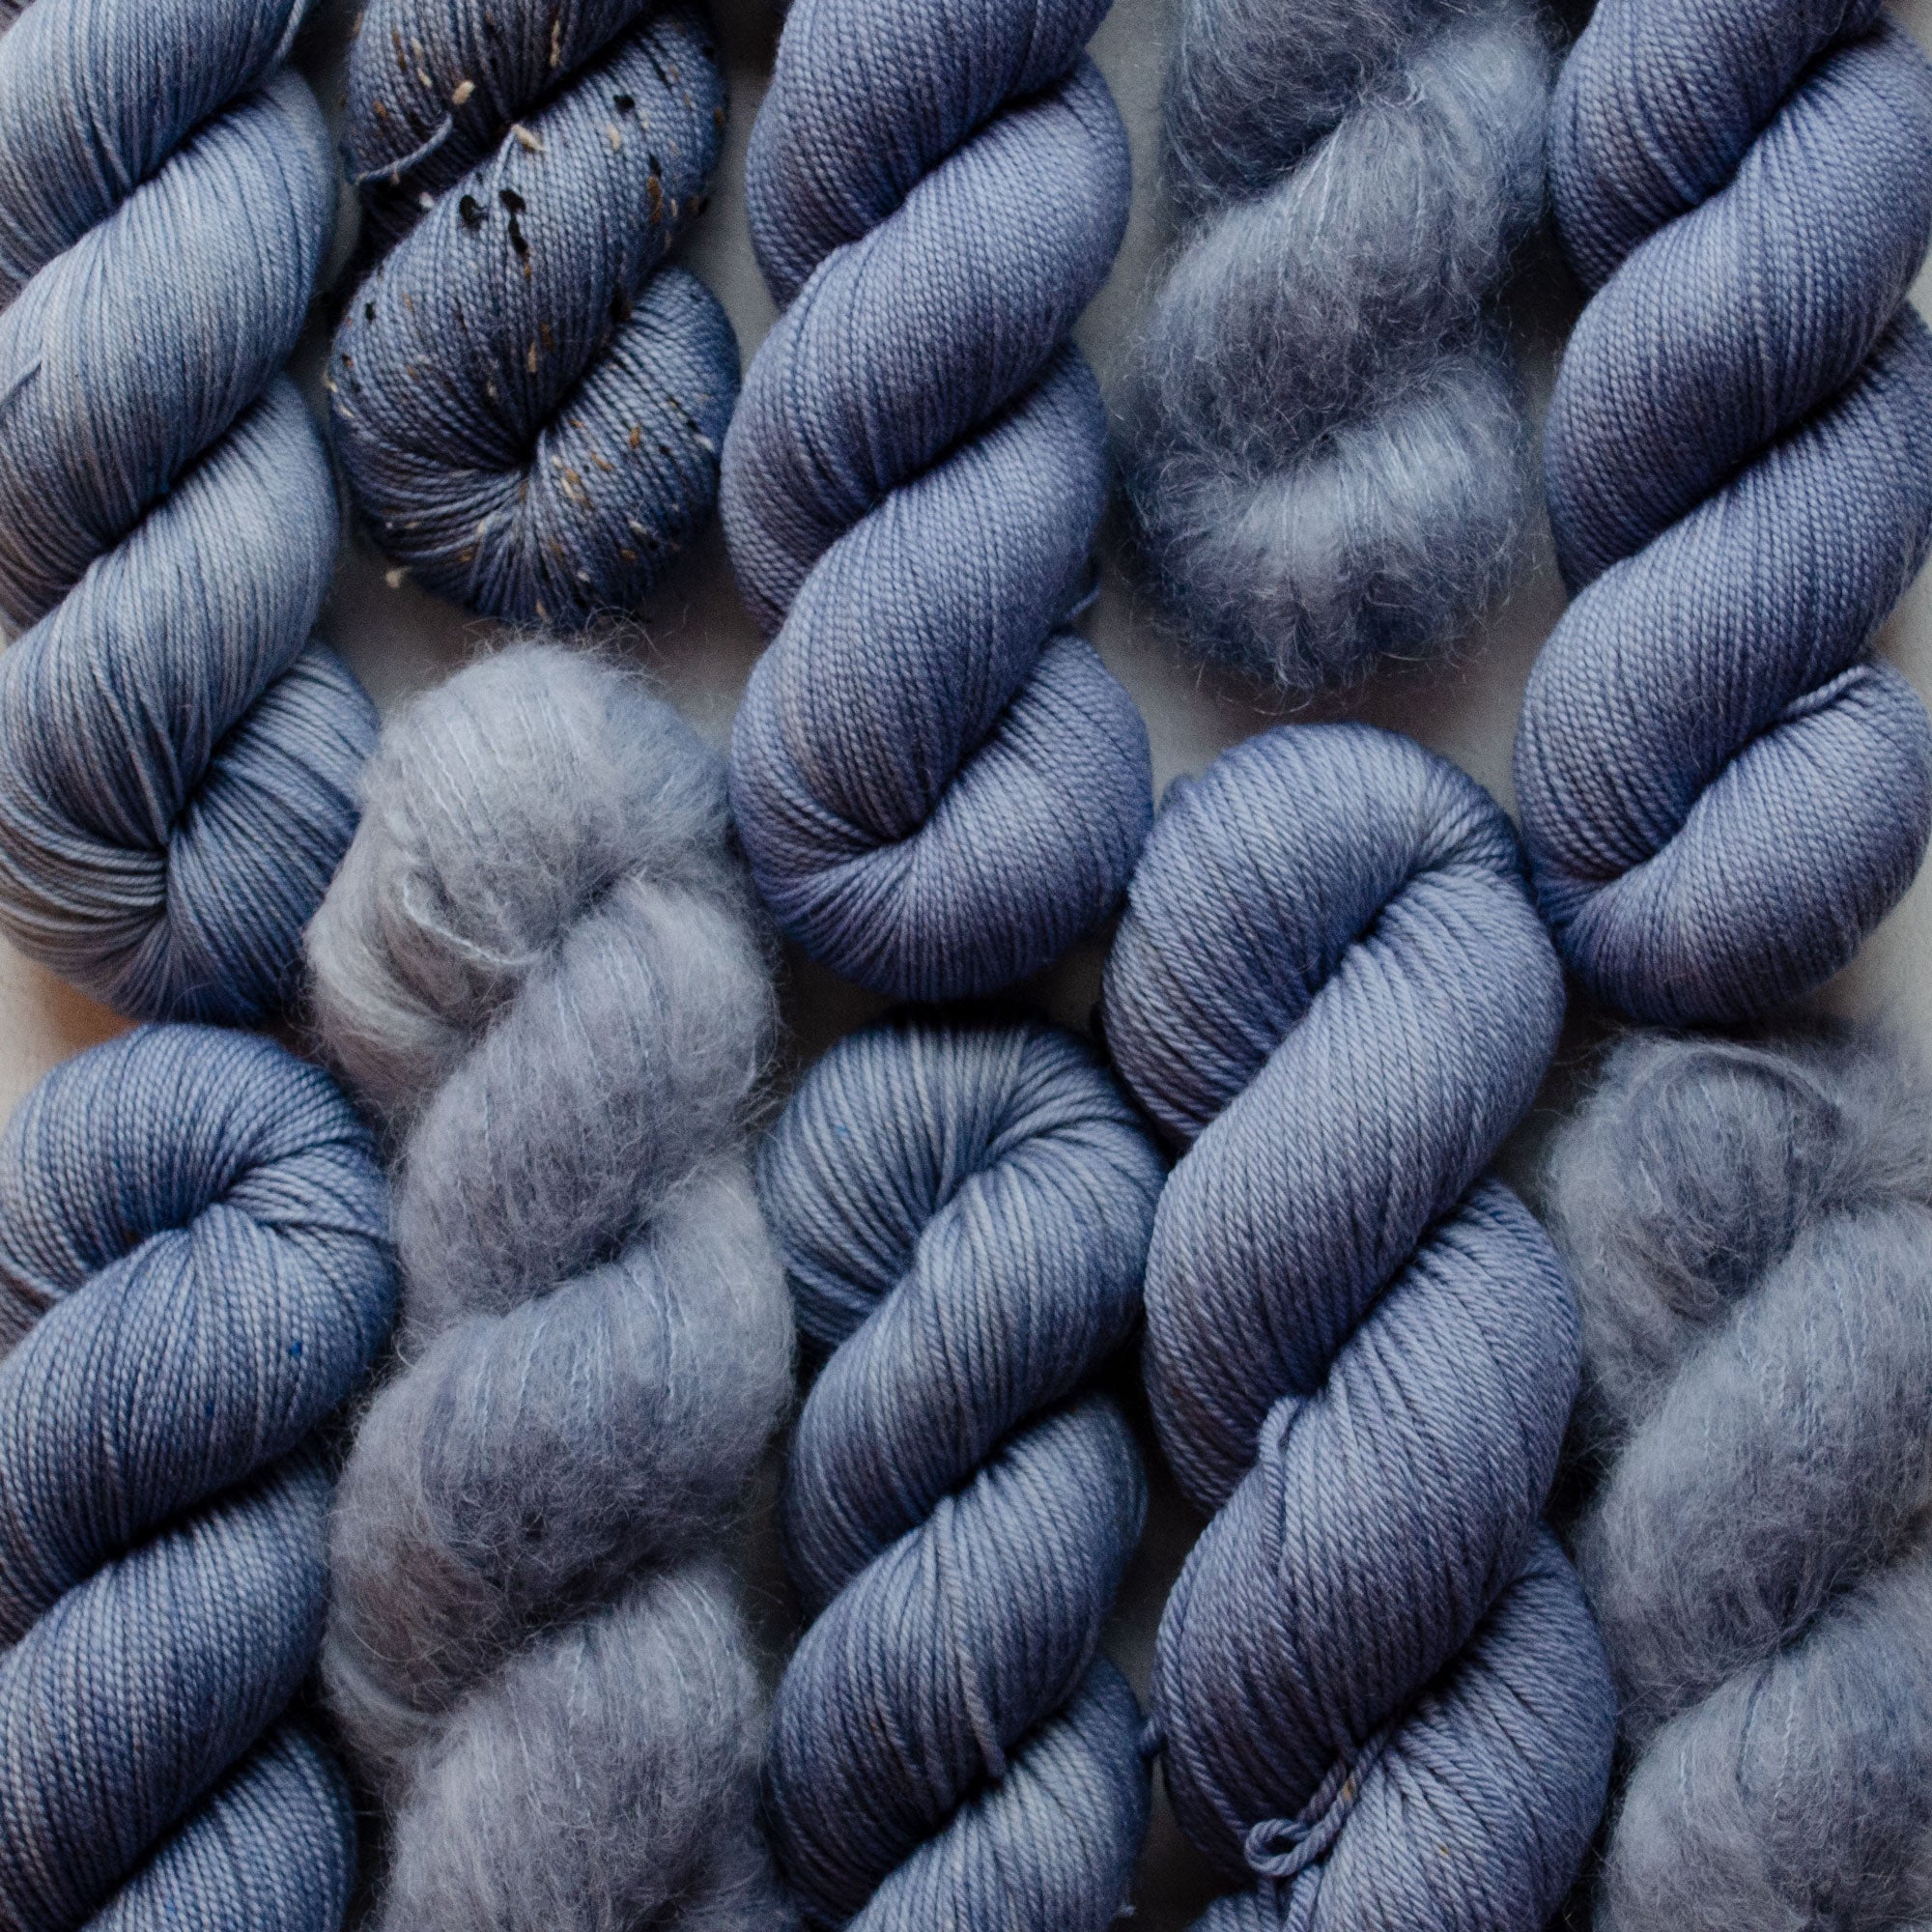 Bulky Hand Dyed Yarn 100% Superwash Merino Wool Ink Tonal -  Portugal